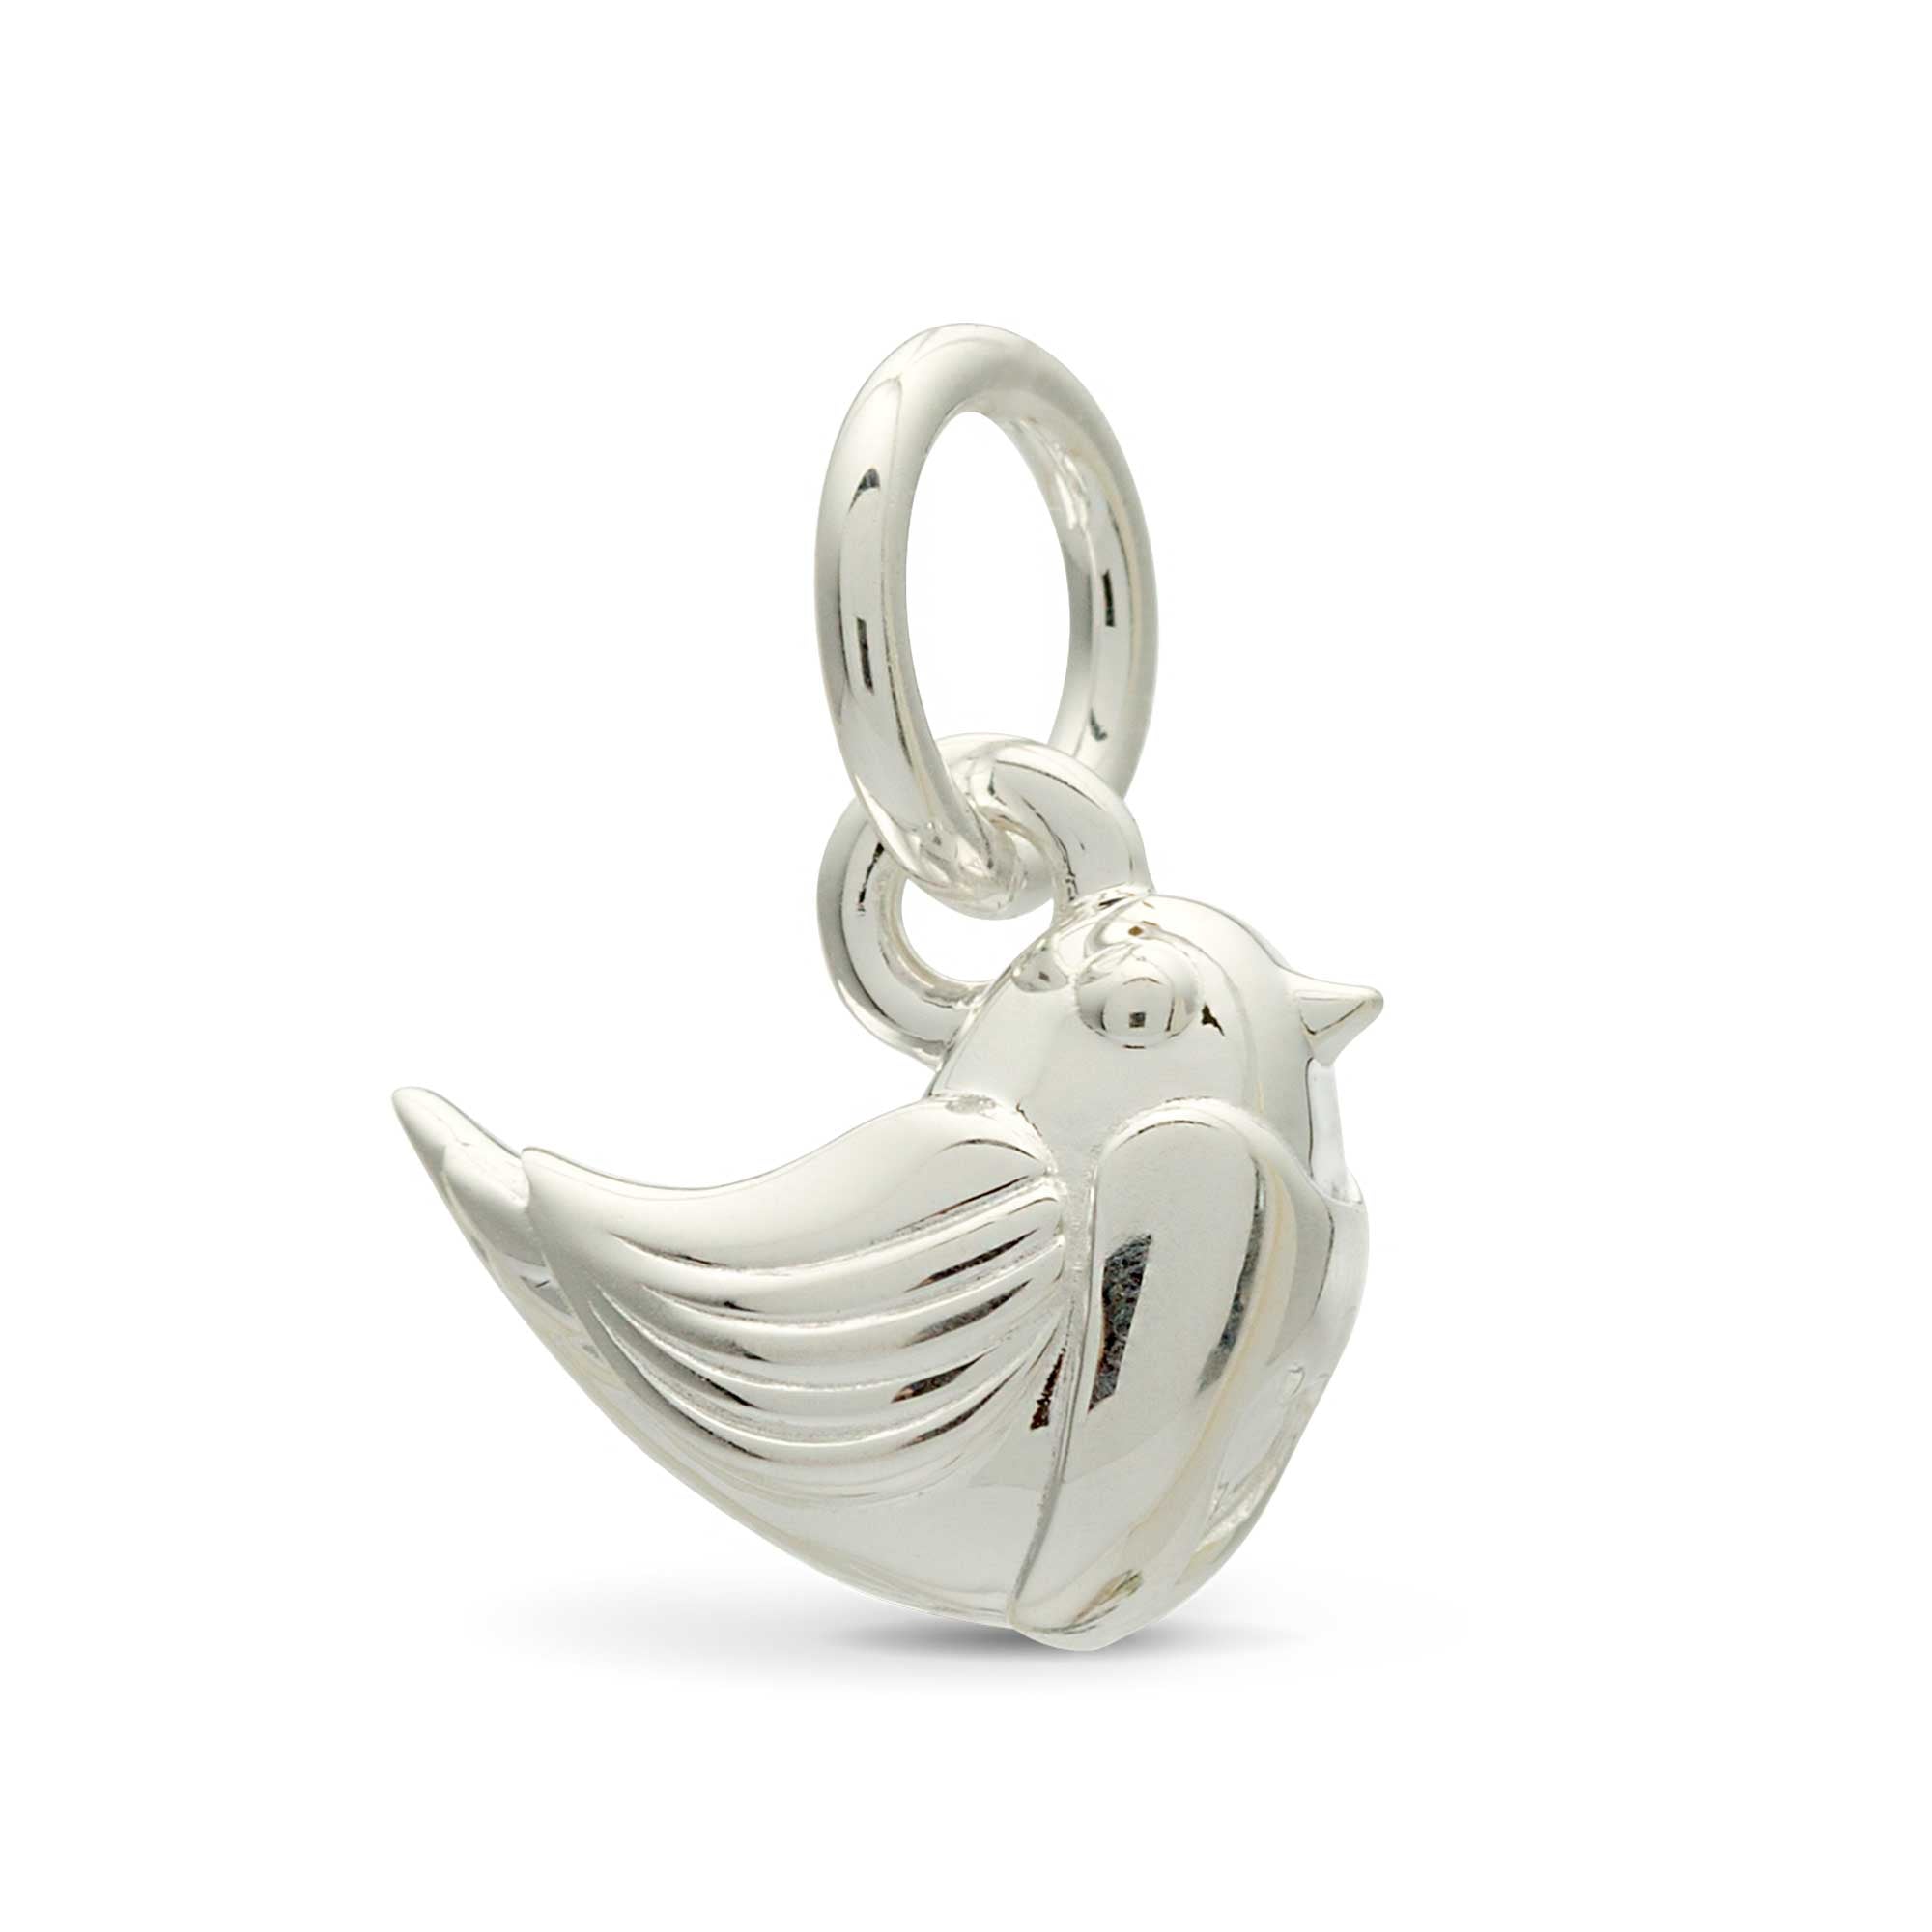 Silver Robin bird christmas nature charm pendant or bracelet Scarlett Jewellery